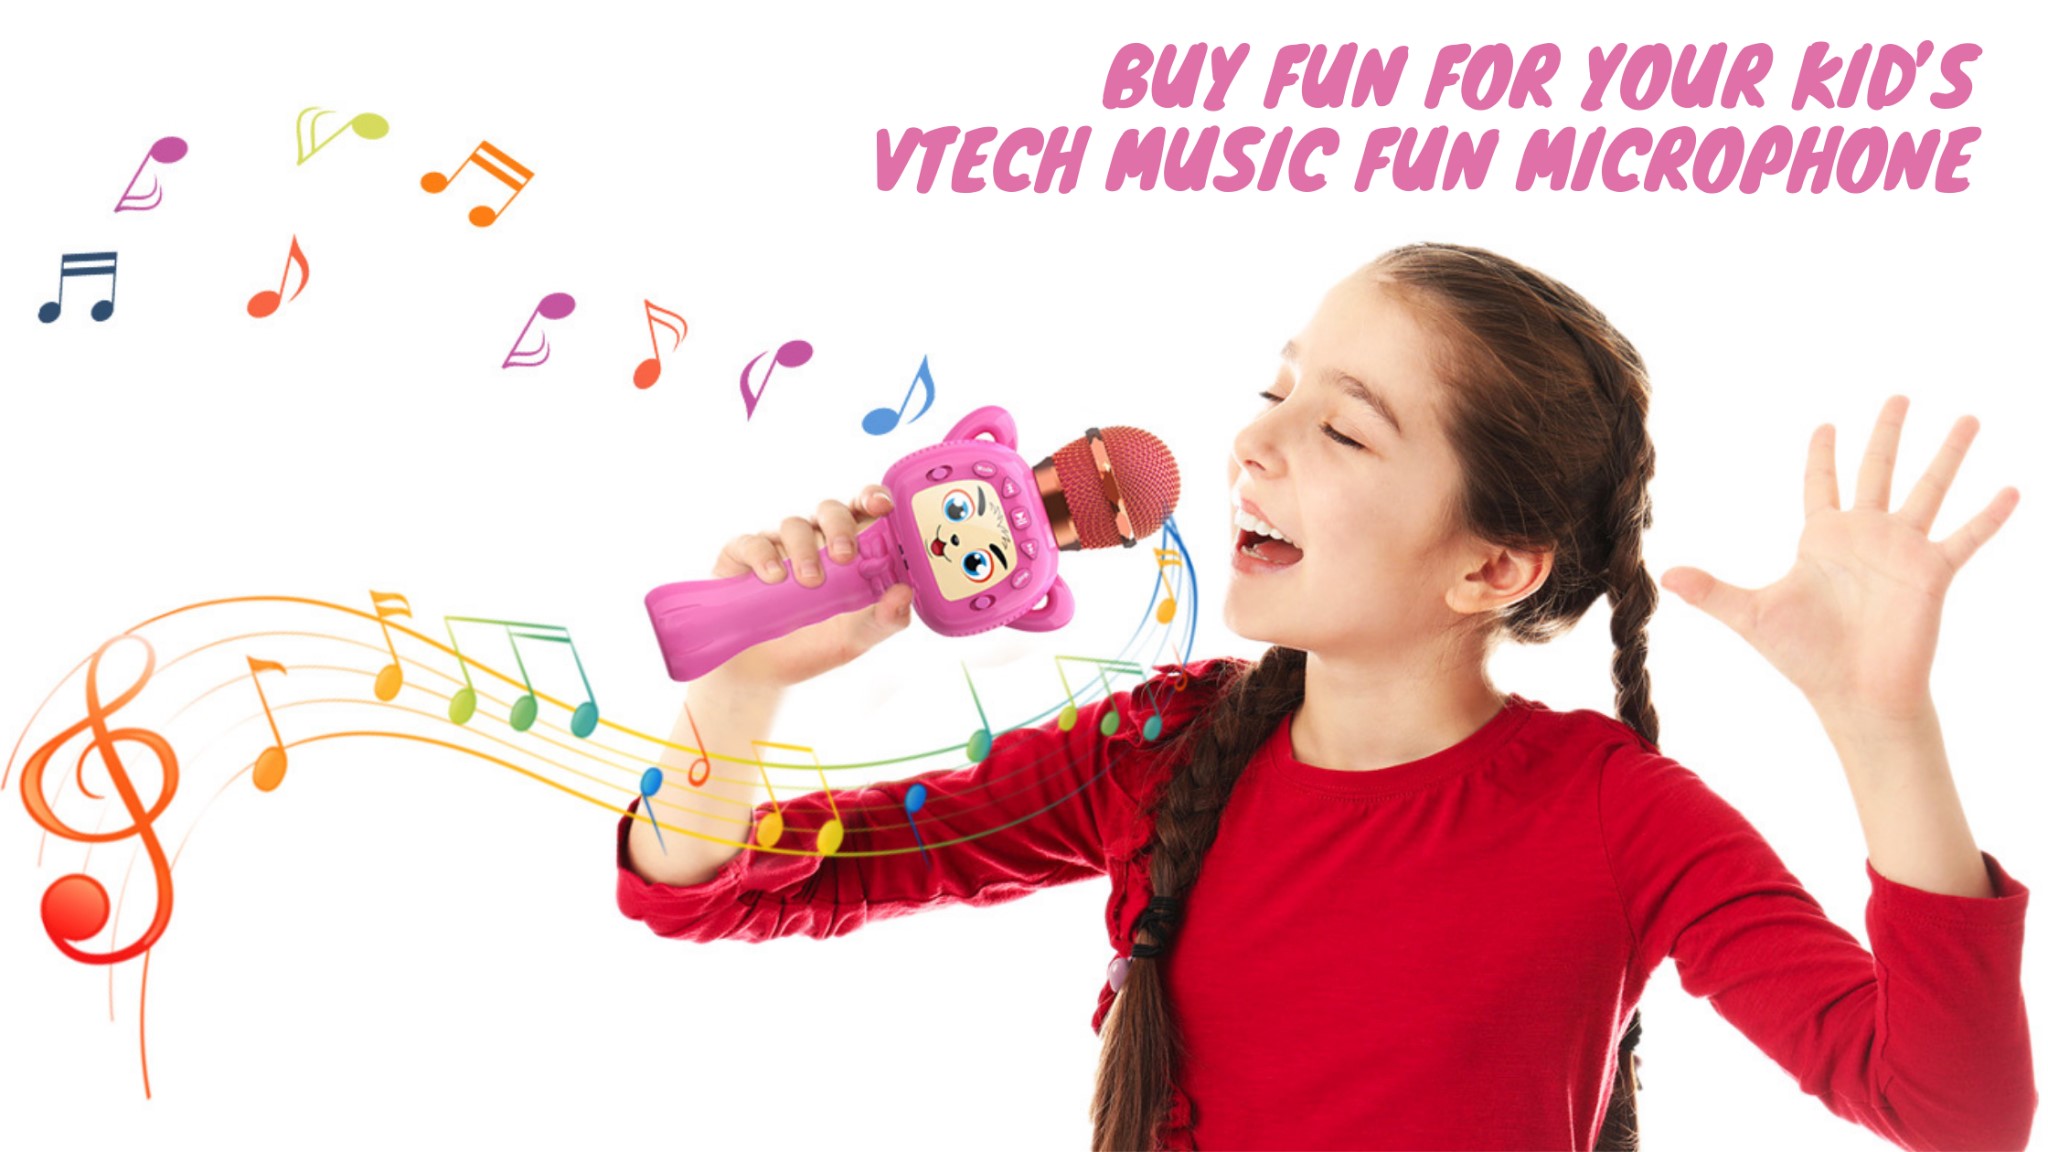 compre divertido para seus filhos vetch music fun microfone